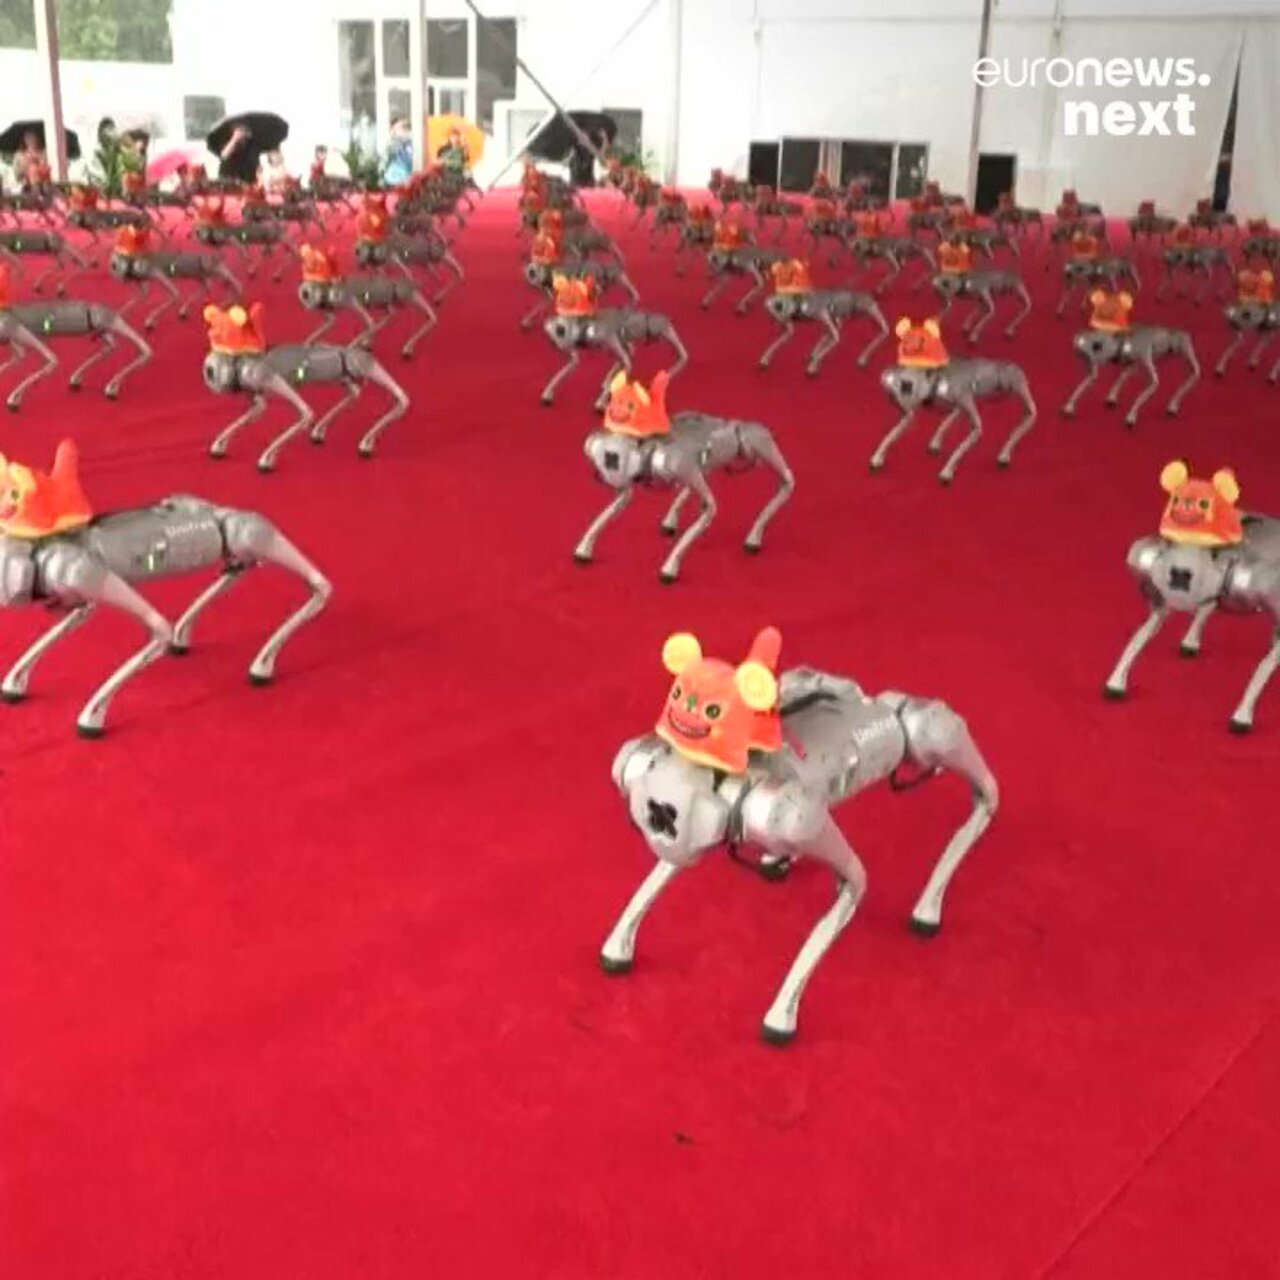 Highlights of the annual World #Robot Conference in Beijing via @euronewsnext #AI #ArtificialIntelligence #MI #Robotics #Engineering #Innovation #FutureOfWork #Tech #Technology cc: @terenceleungsf @jamesmarland @wil_bielert @ronald_vanloon https://t.co/EfbTdzzpDE